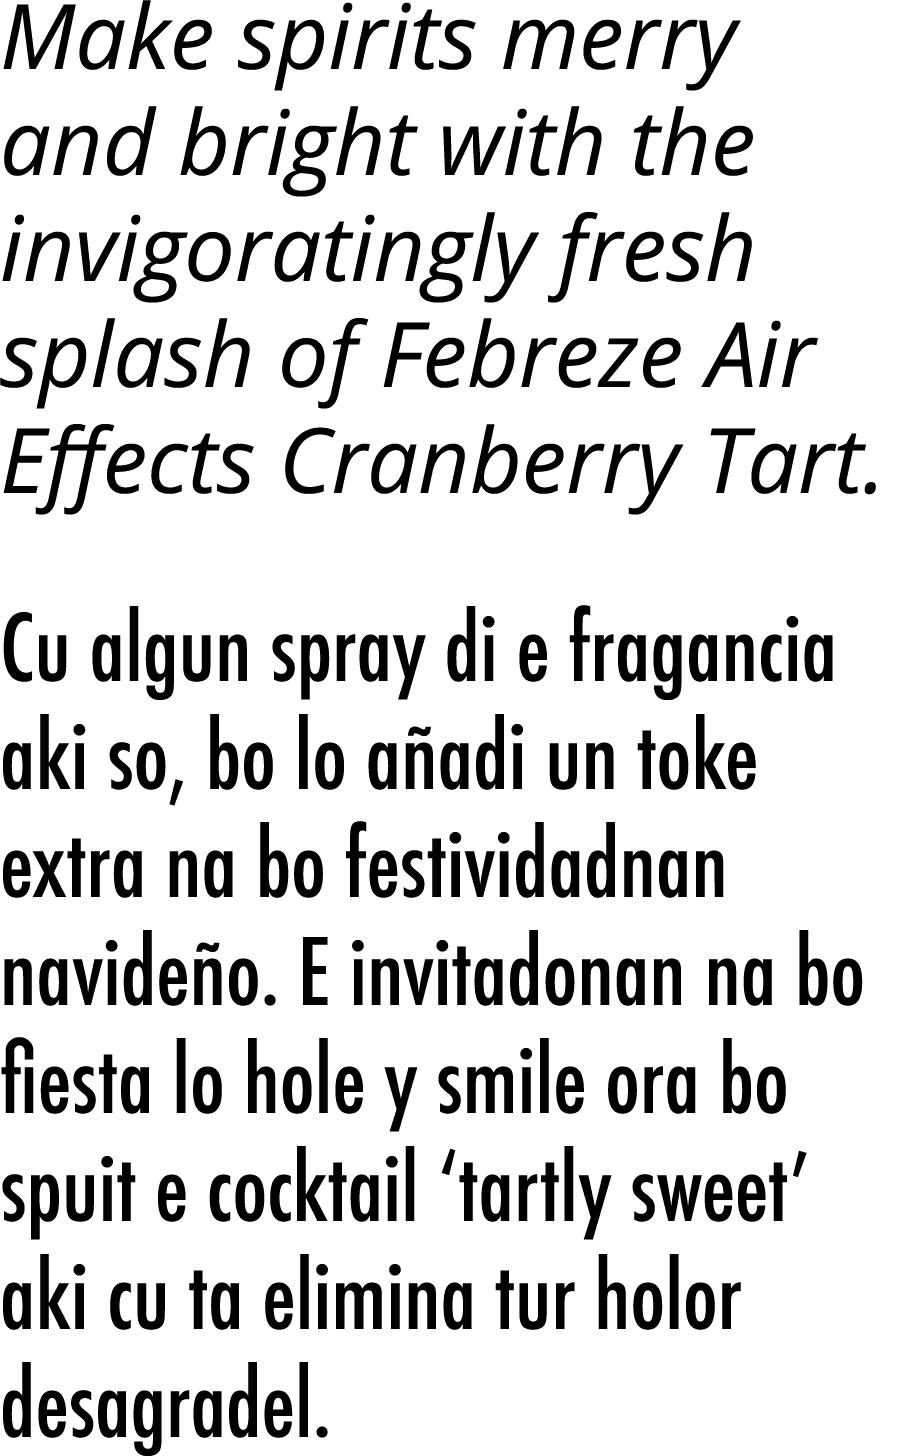 Make spirits merry and bright with the invigoratingly fresh splash of Febreze Air Effects Cranberry Tart. Cu algun sp...